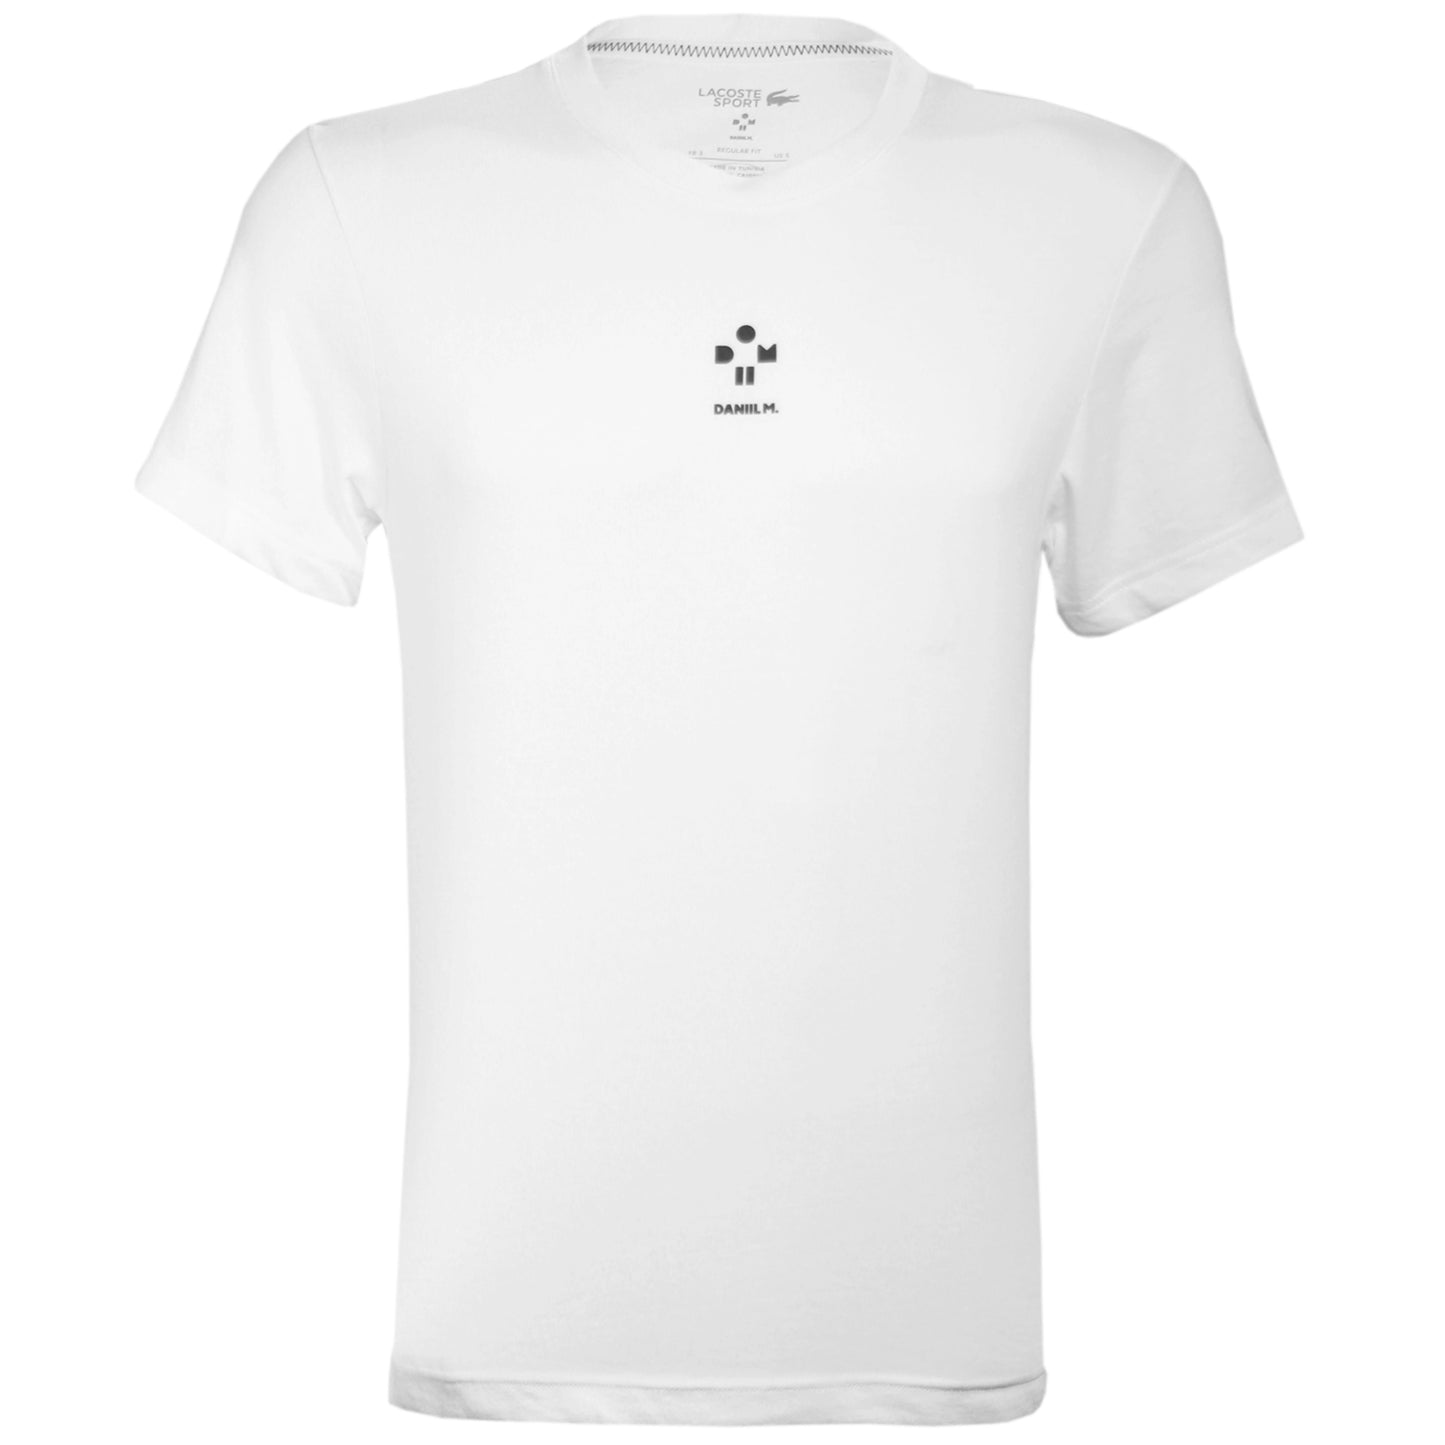 Lacoste X Daniil Medvedev Men's T-Shirt TH9447-51-001